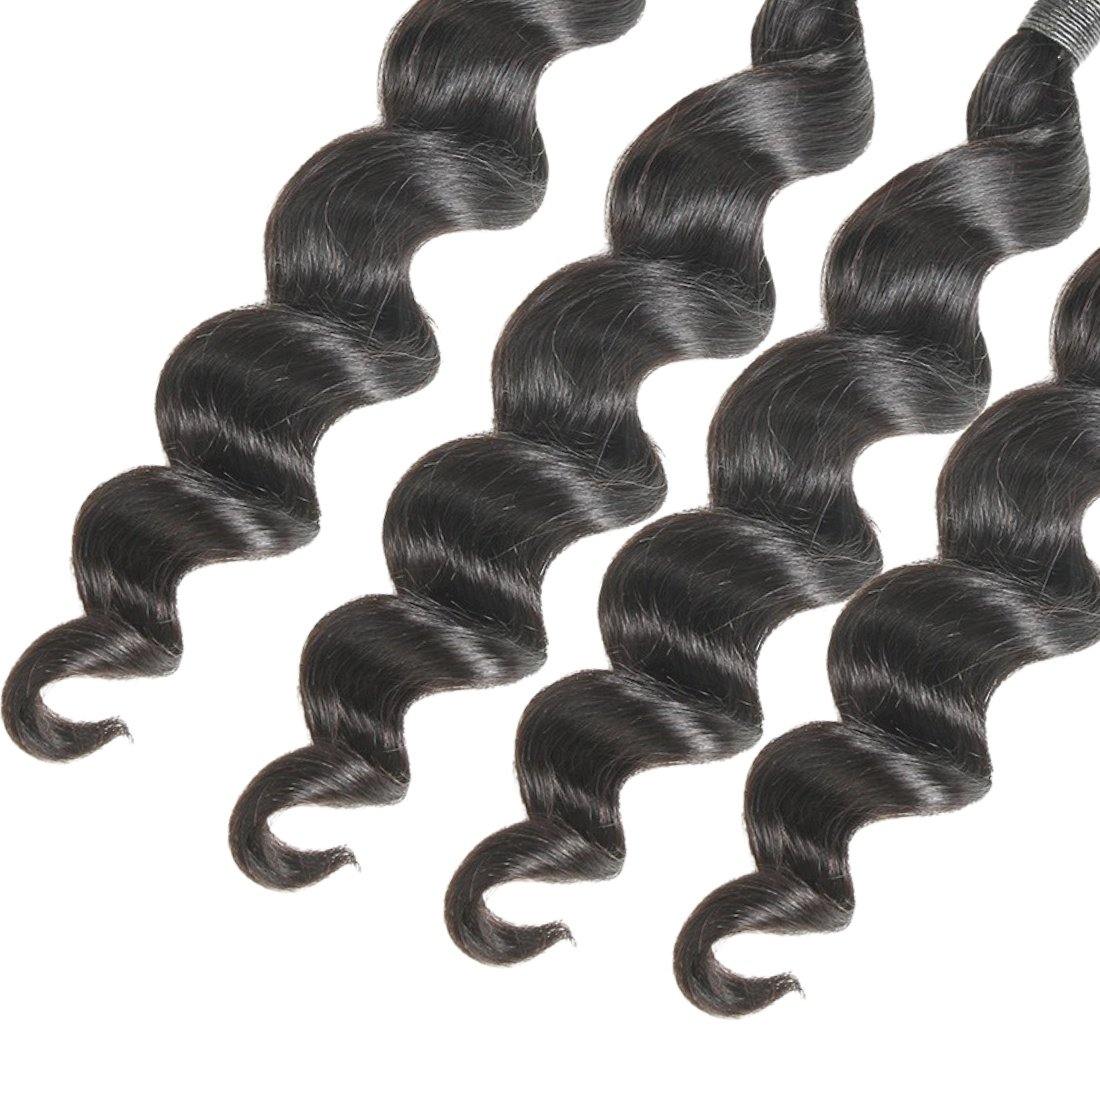 Brazilian Loose Wave Hair 4 Bundles 100% Human Hair Extension Weaves - Seyna Hair